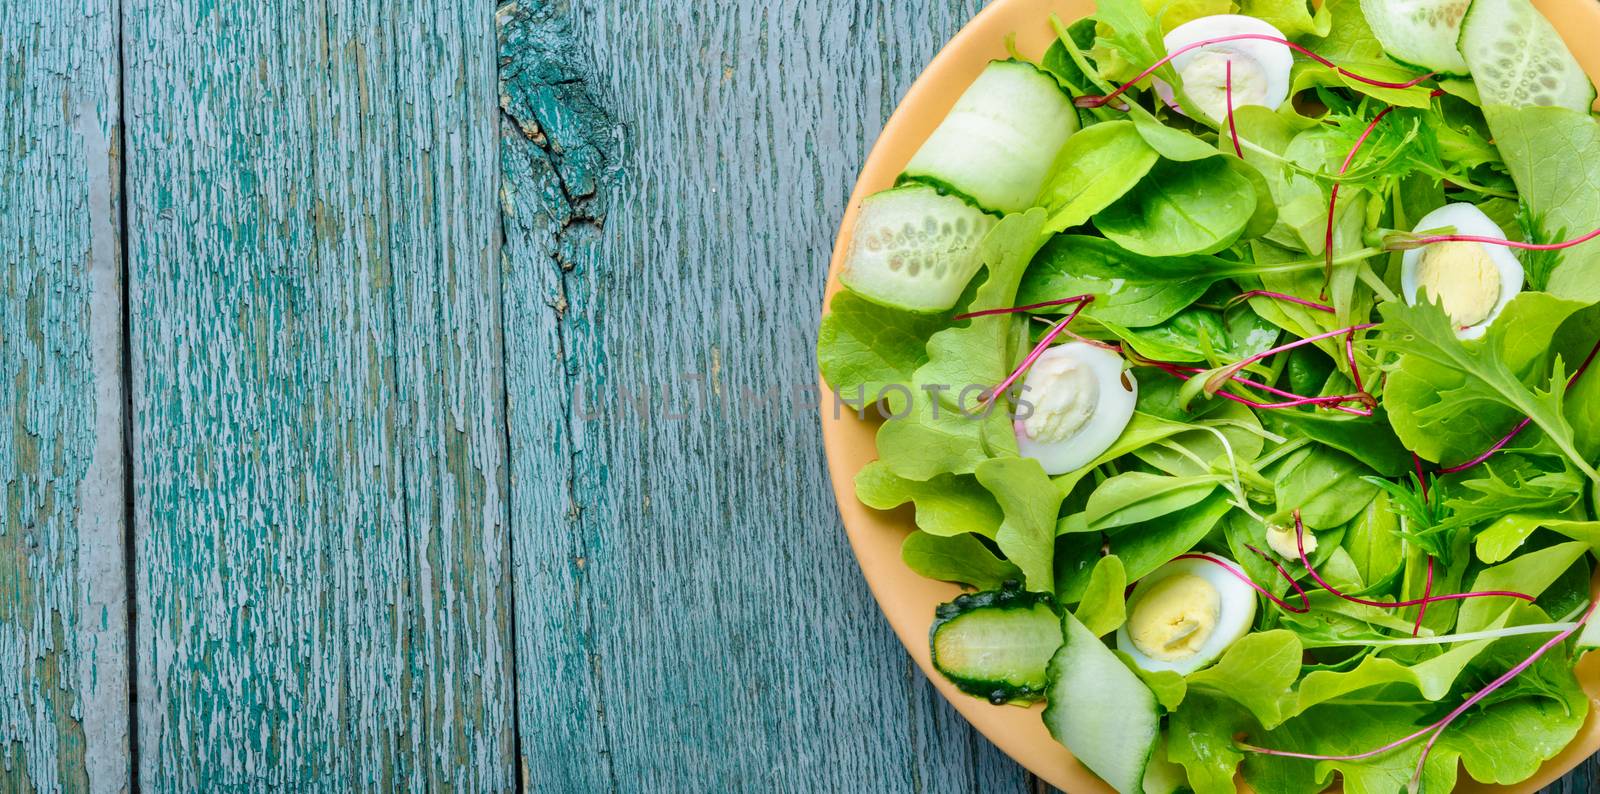 Fresh green mix salad with microgreens.Healthy vegan dish